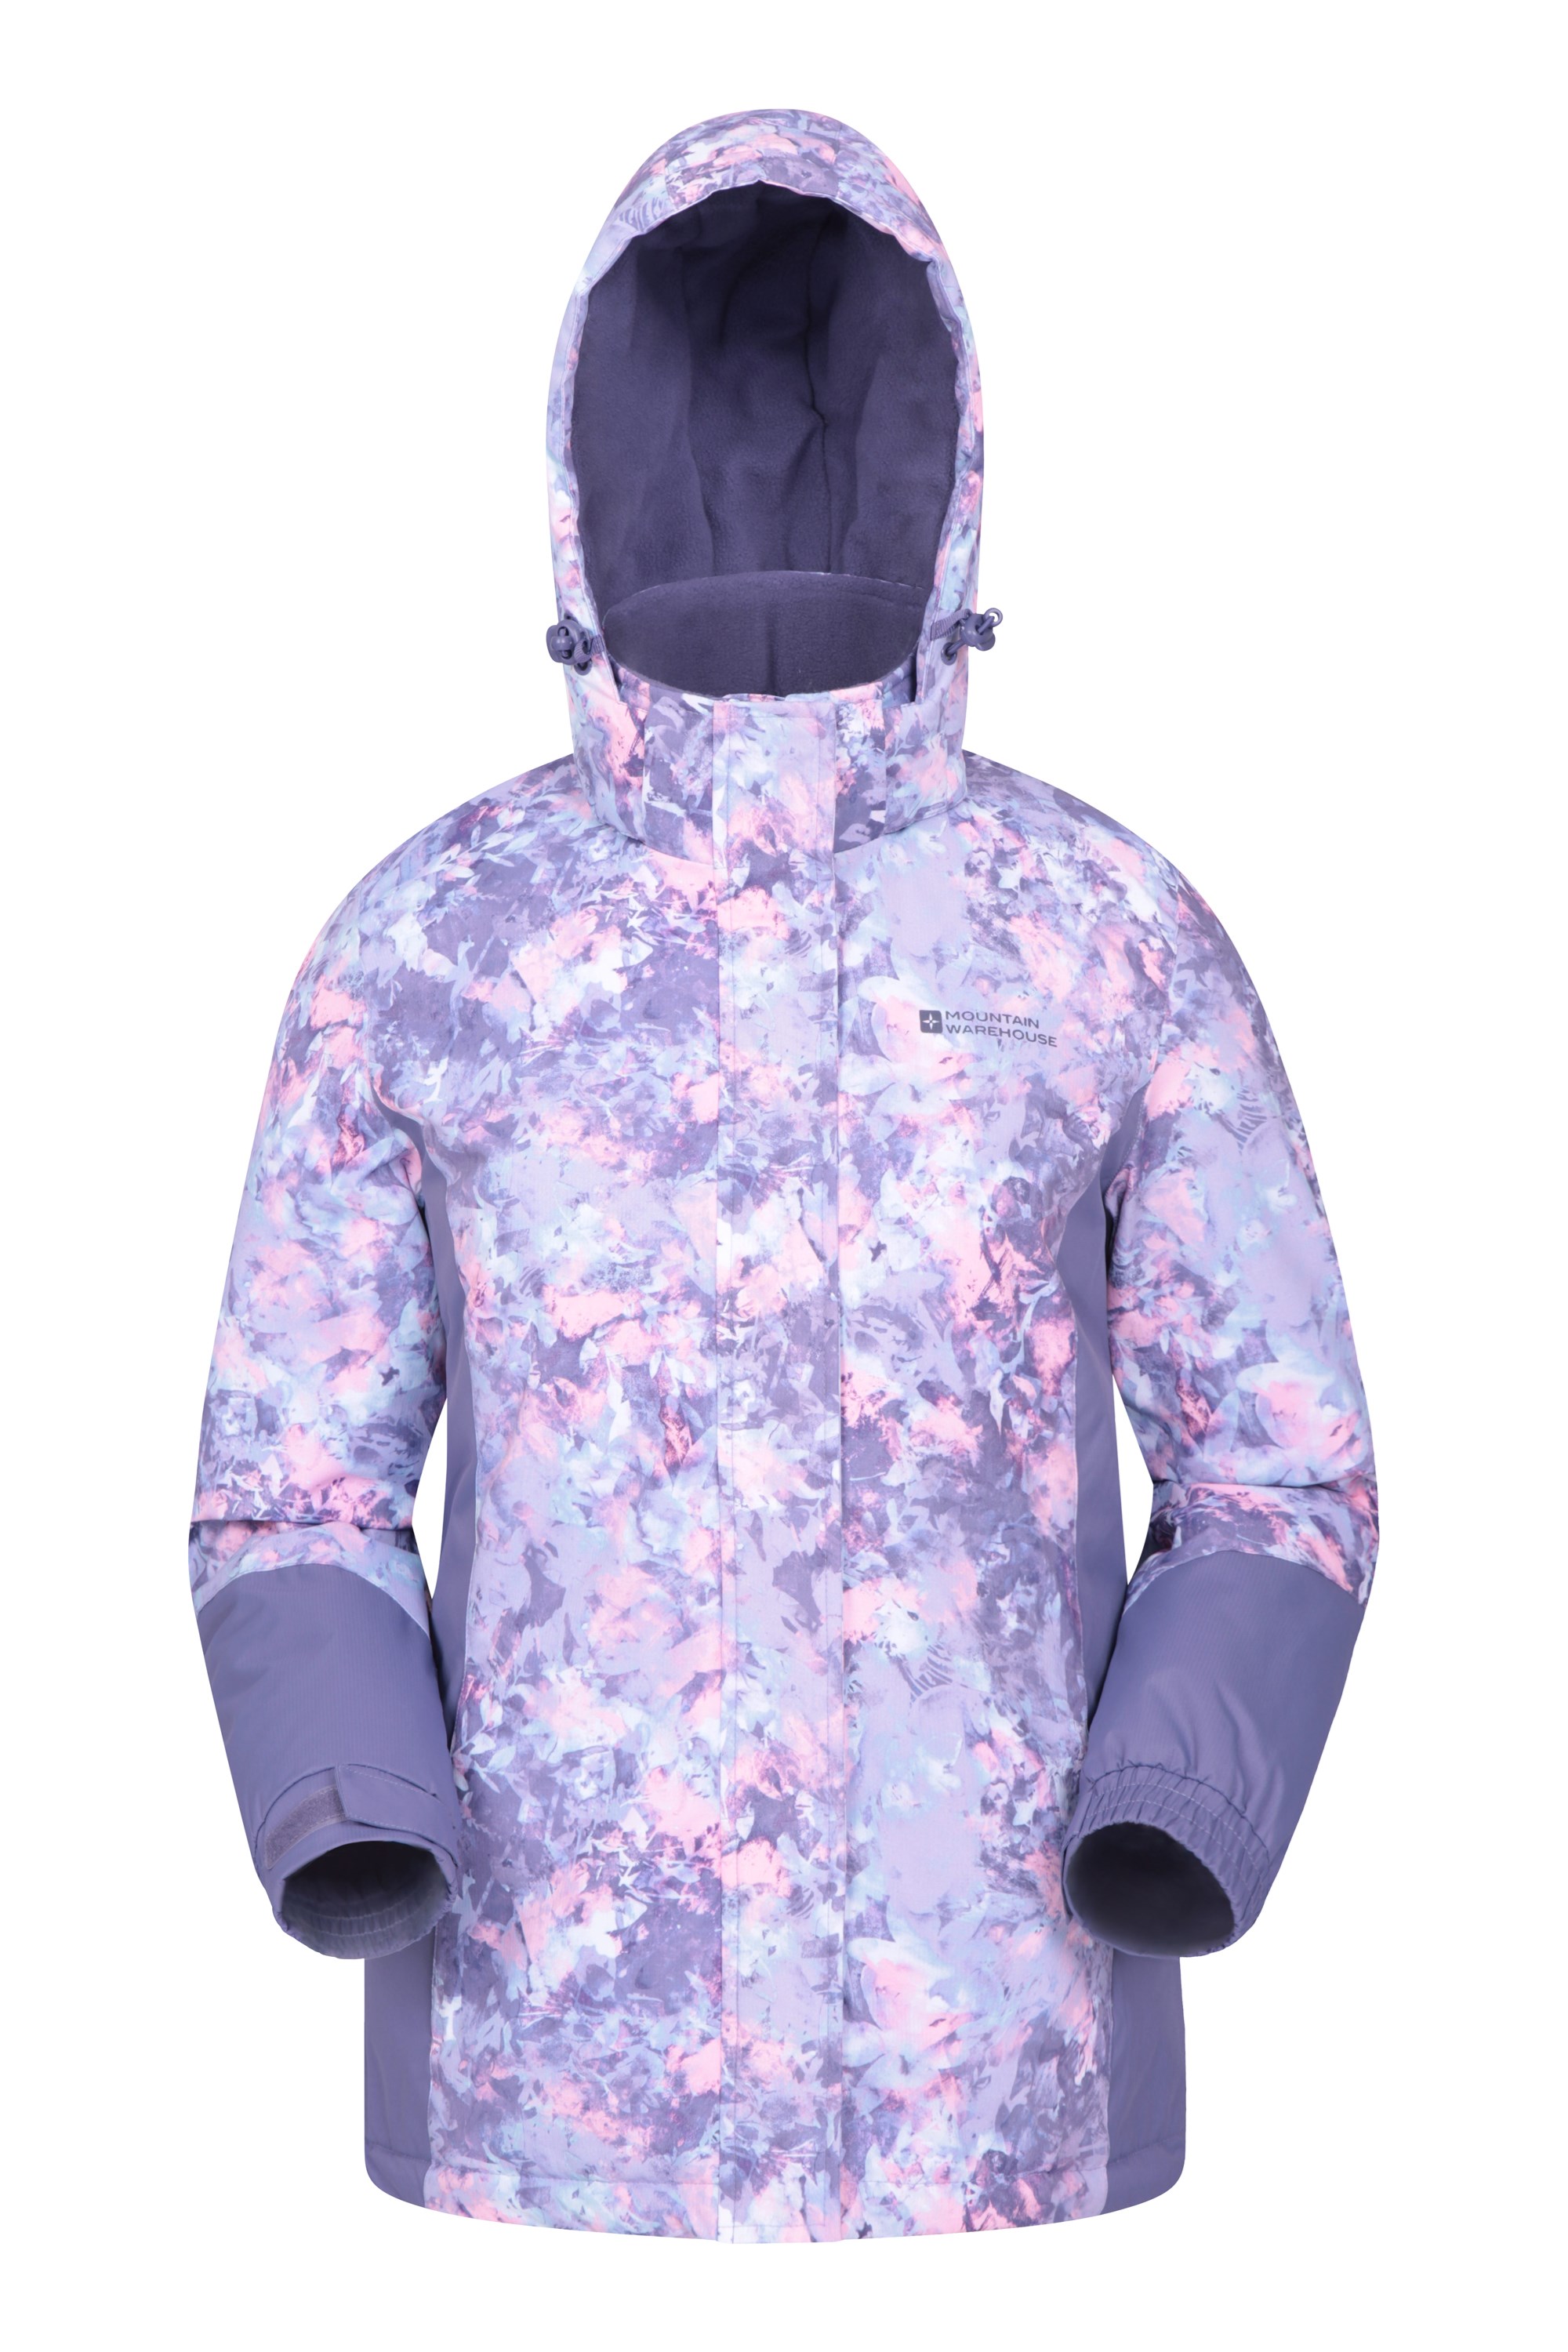 Mountain Warehouse Dawn Womens Ski Jacket Adjustable Cuff Ideal Ski Clothes in Winter Fleece Lined Ski Coat Hem & Hood Snowproof Warm Ladies Jacket 